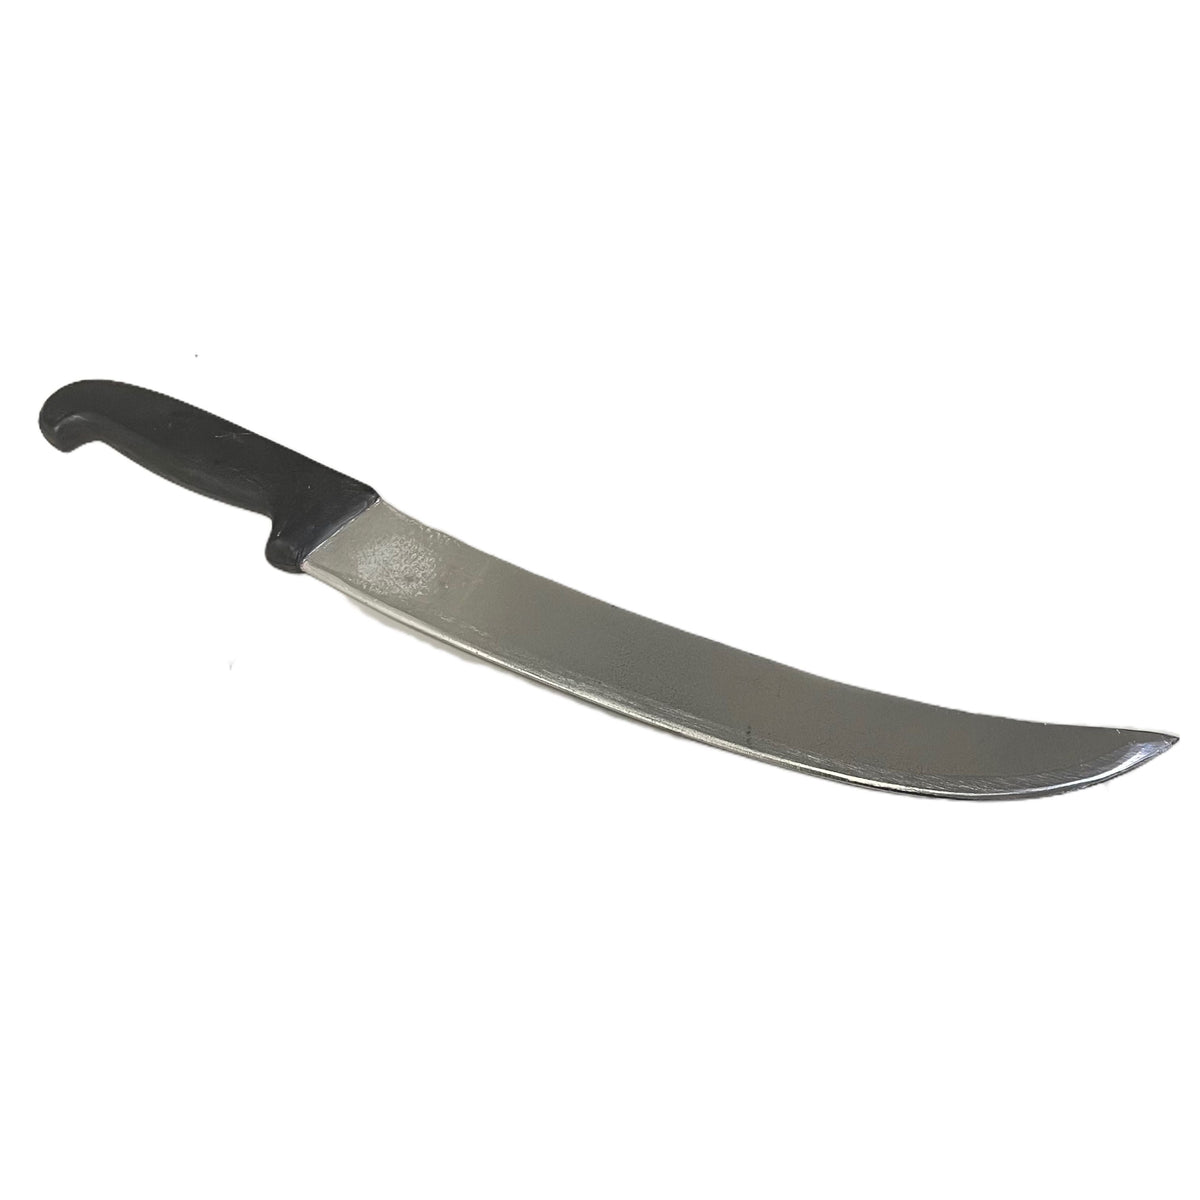 Plastic Scimitar Butcher’s Knife Replica - New - NEW